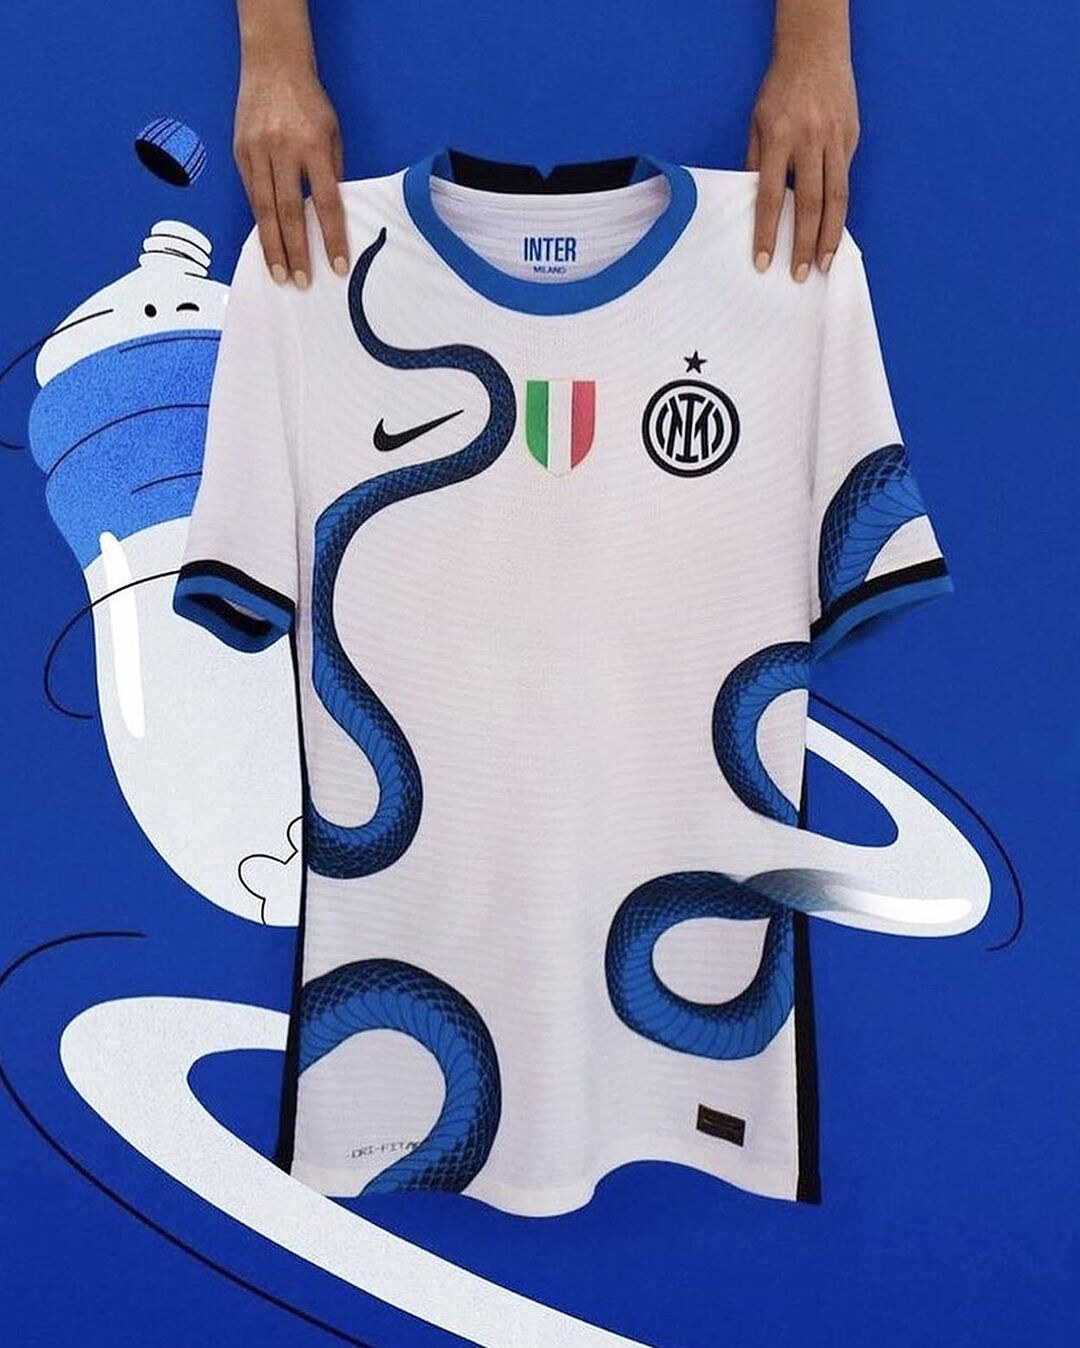 Internazionale Milano away kit 2021-22